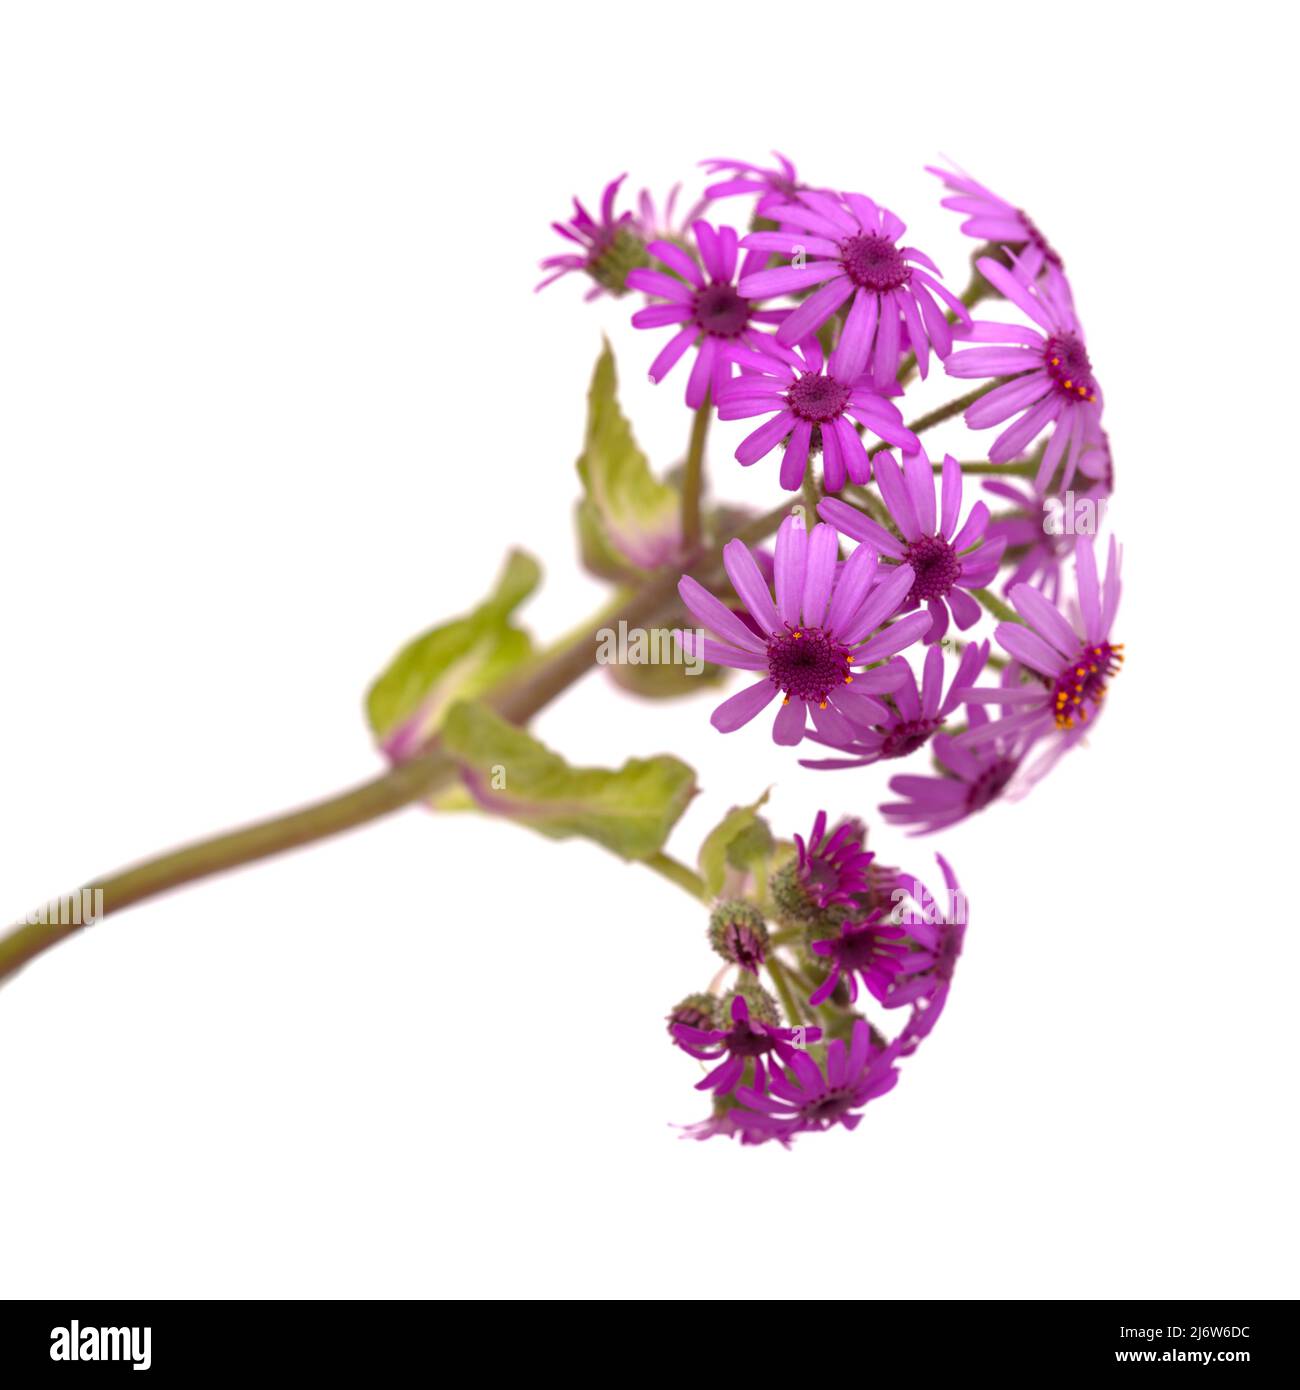 Flora de Gran Canaria - flores magenta de Pericallis webbii, endémica de la isla Foto de stock